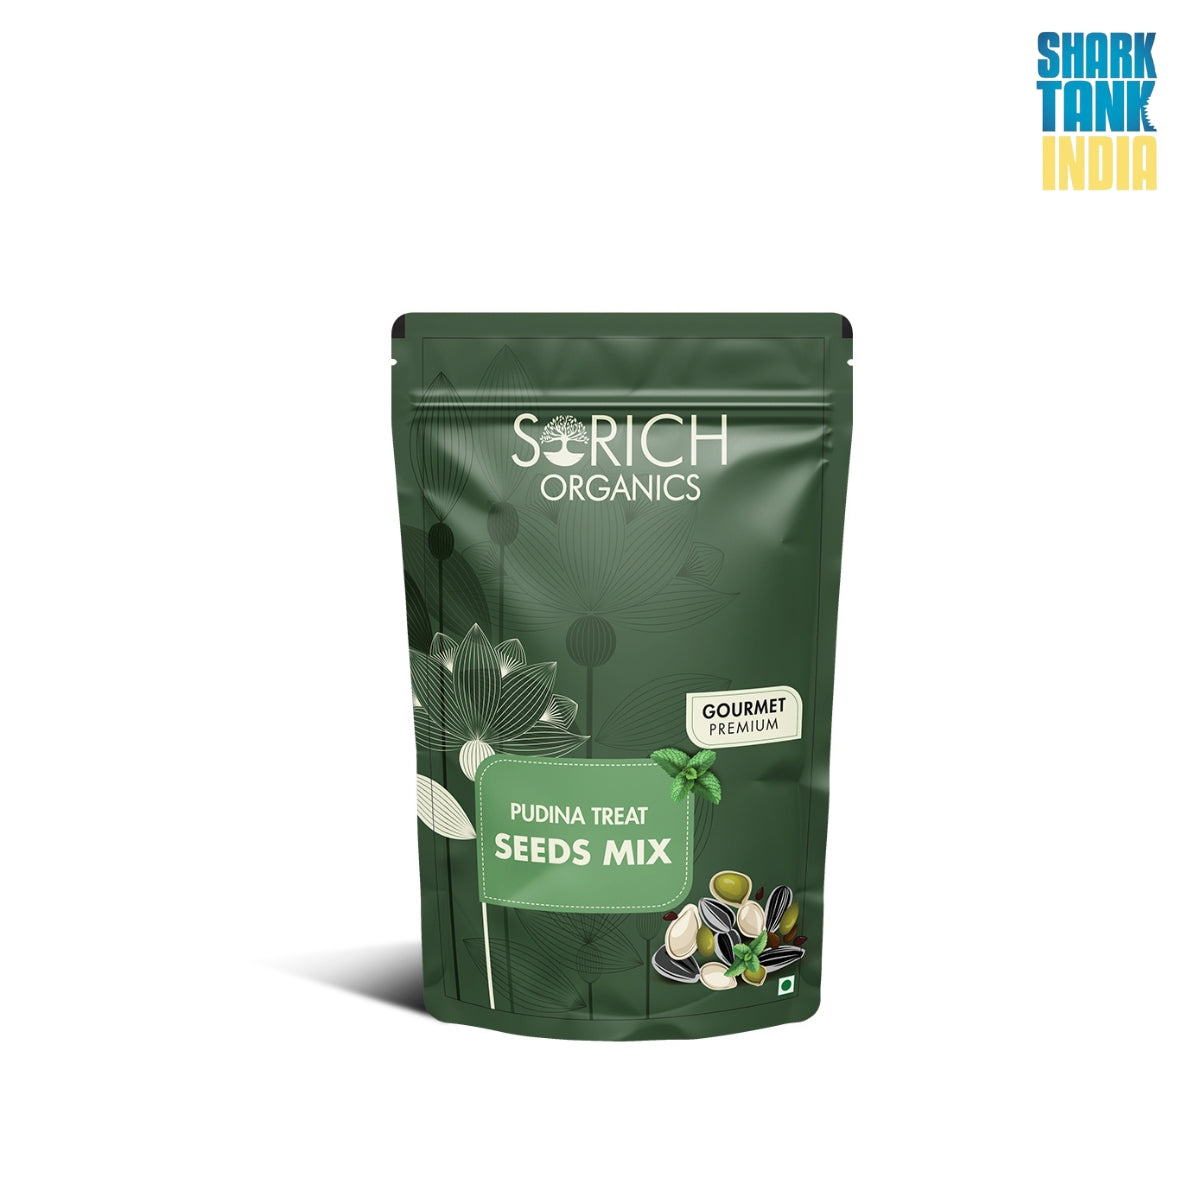 Pudina Treat Seeds Mix - Sorich